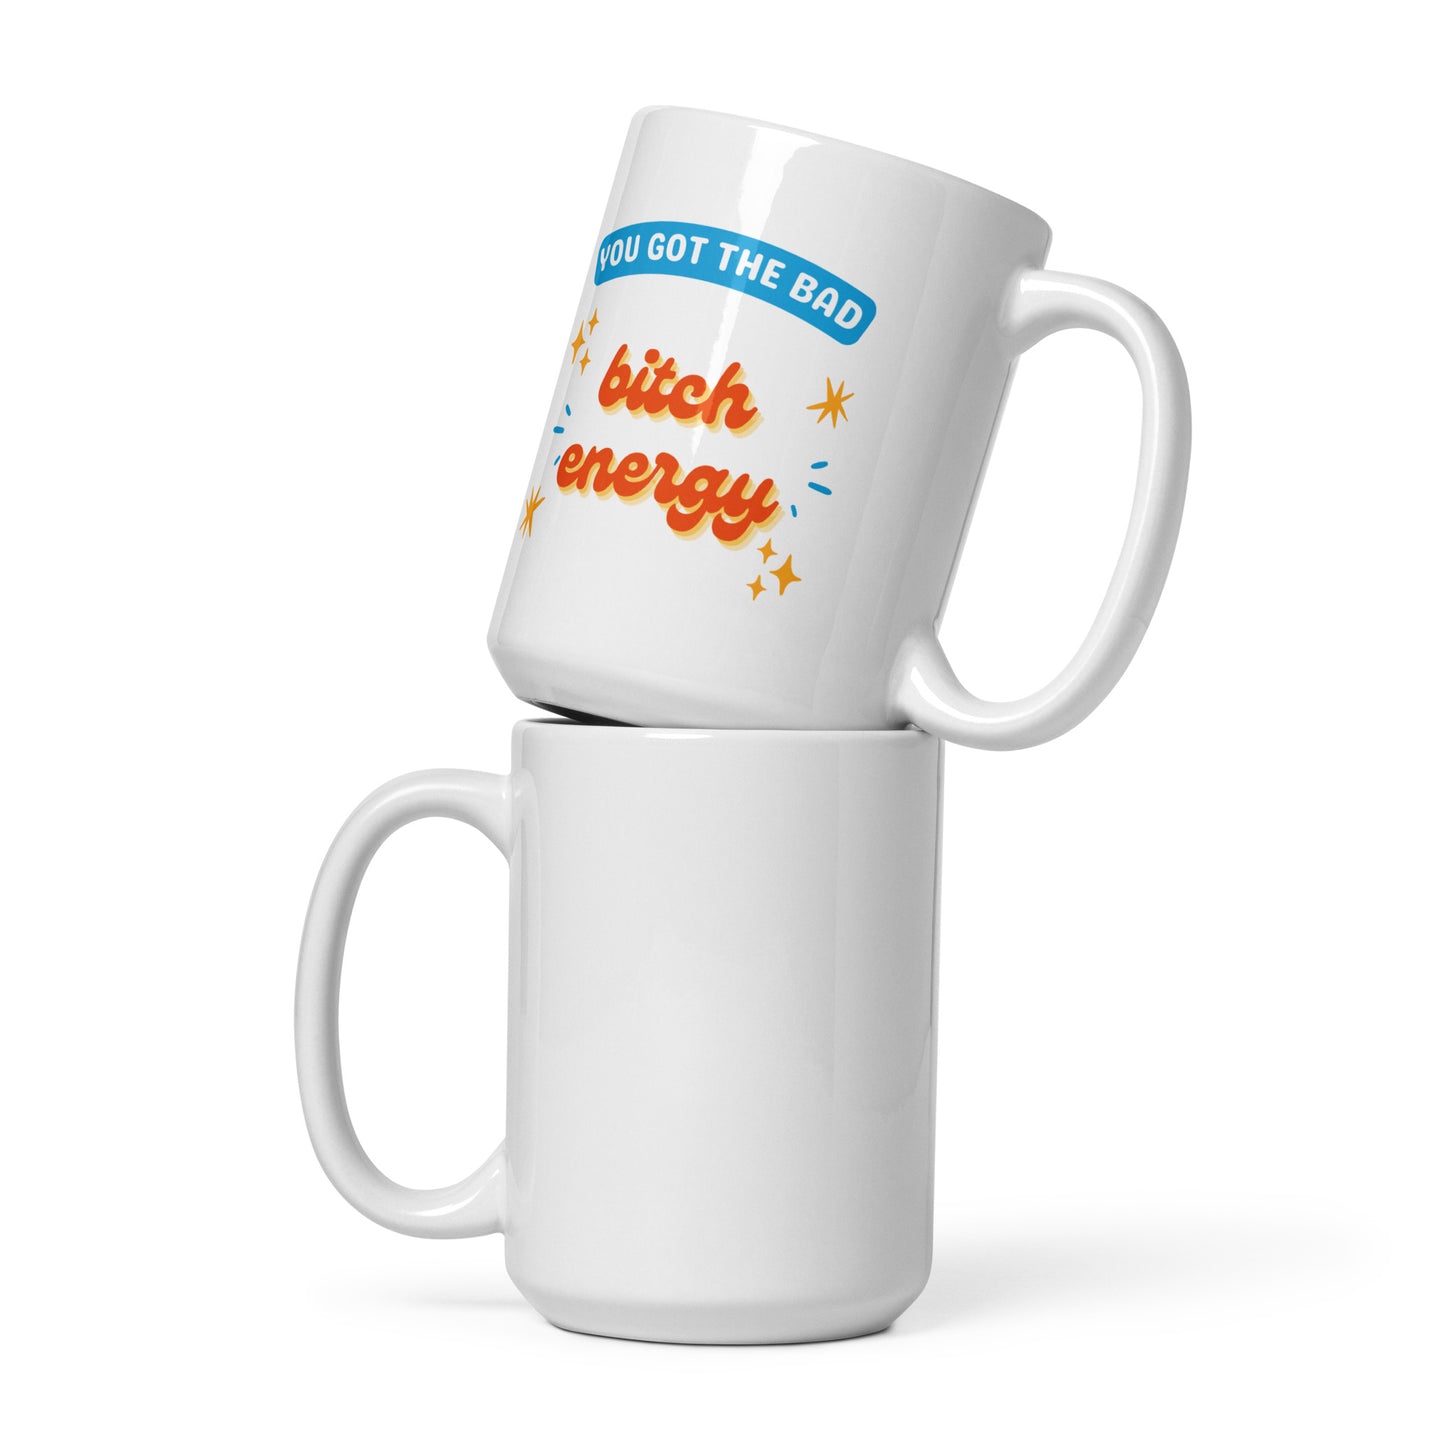 BITCH ENERGY - White glossy mug